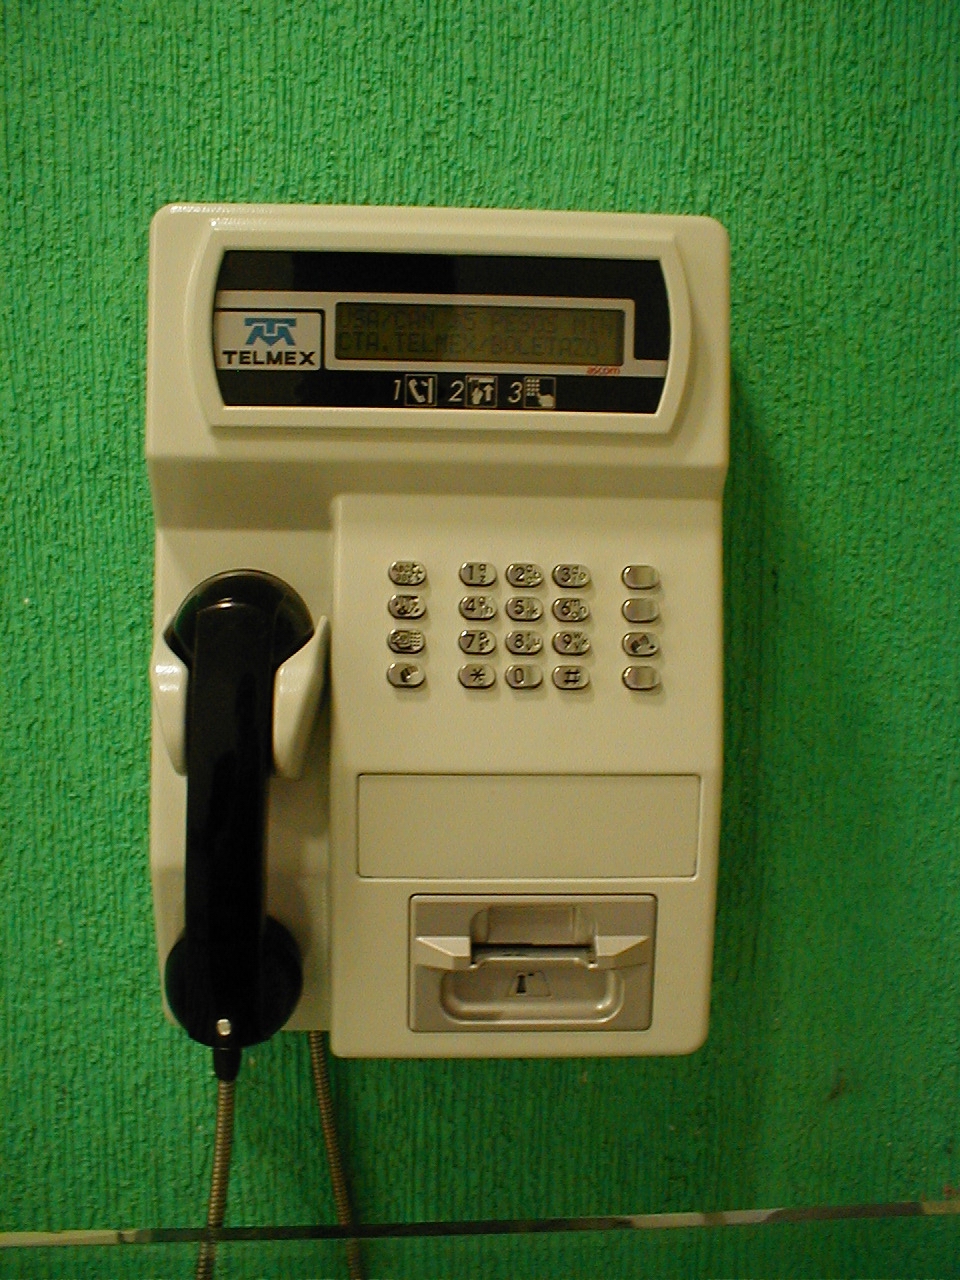 dario telmex telephone green wall calling making a call telephoning communicating